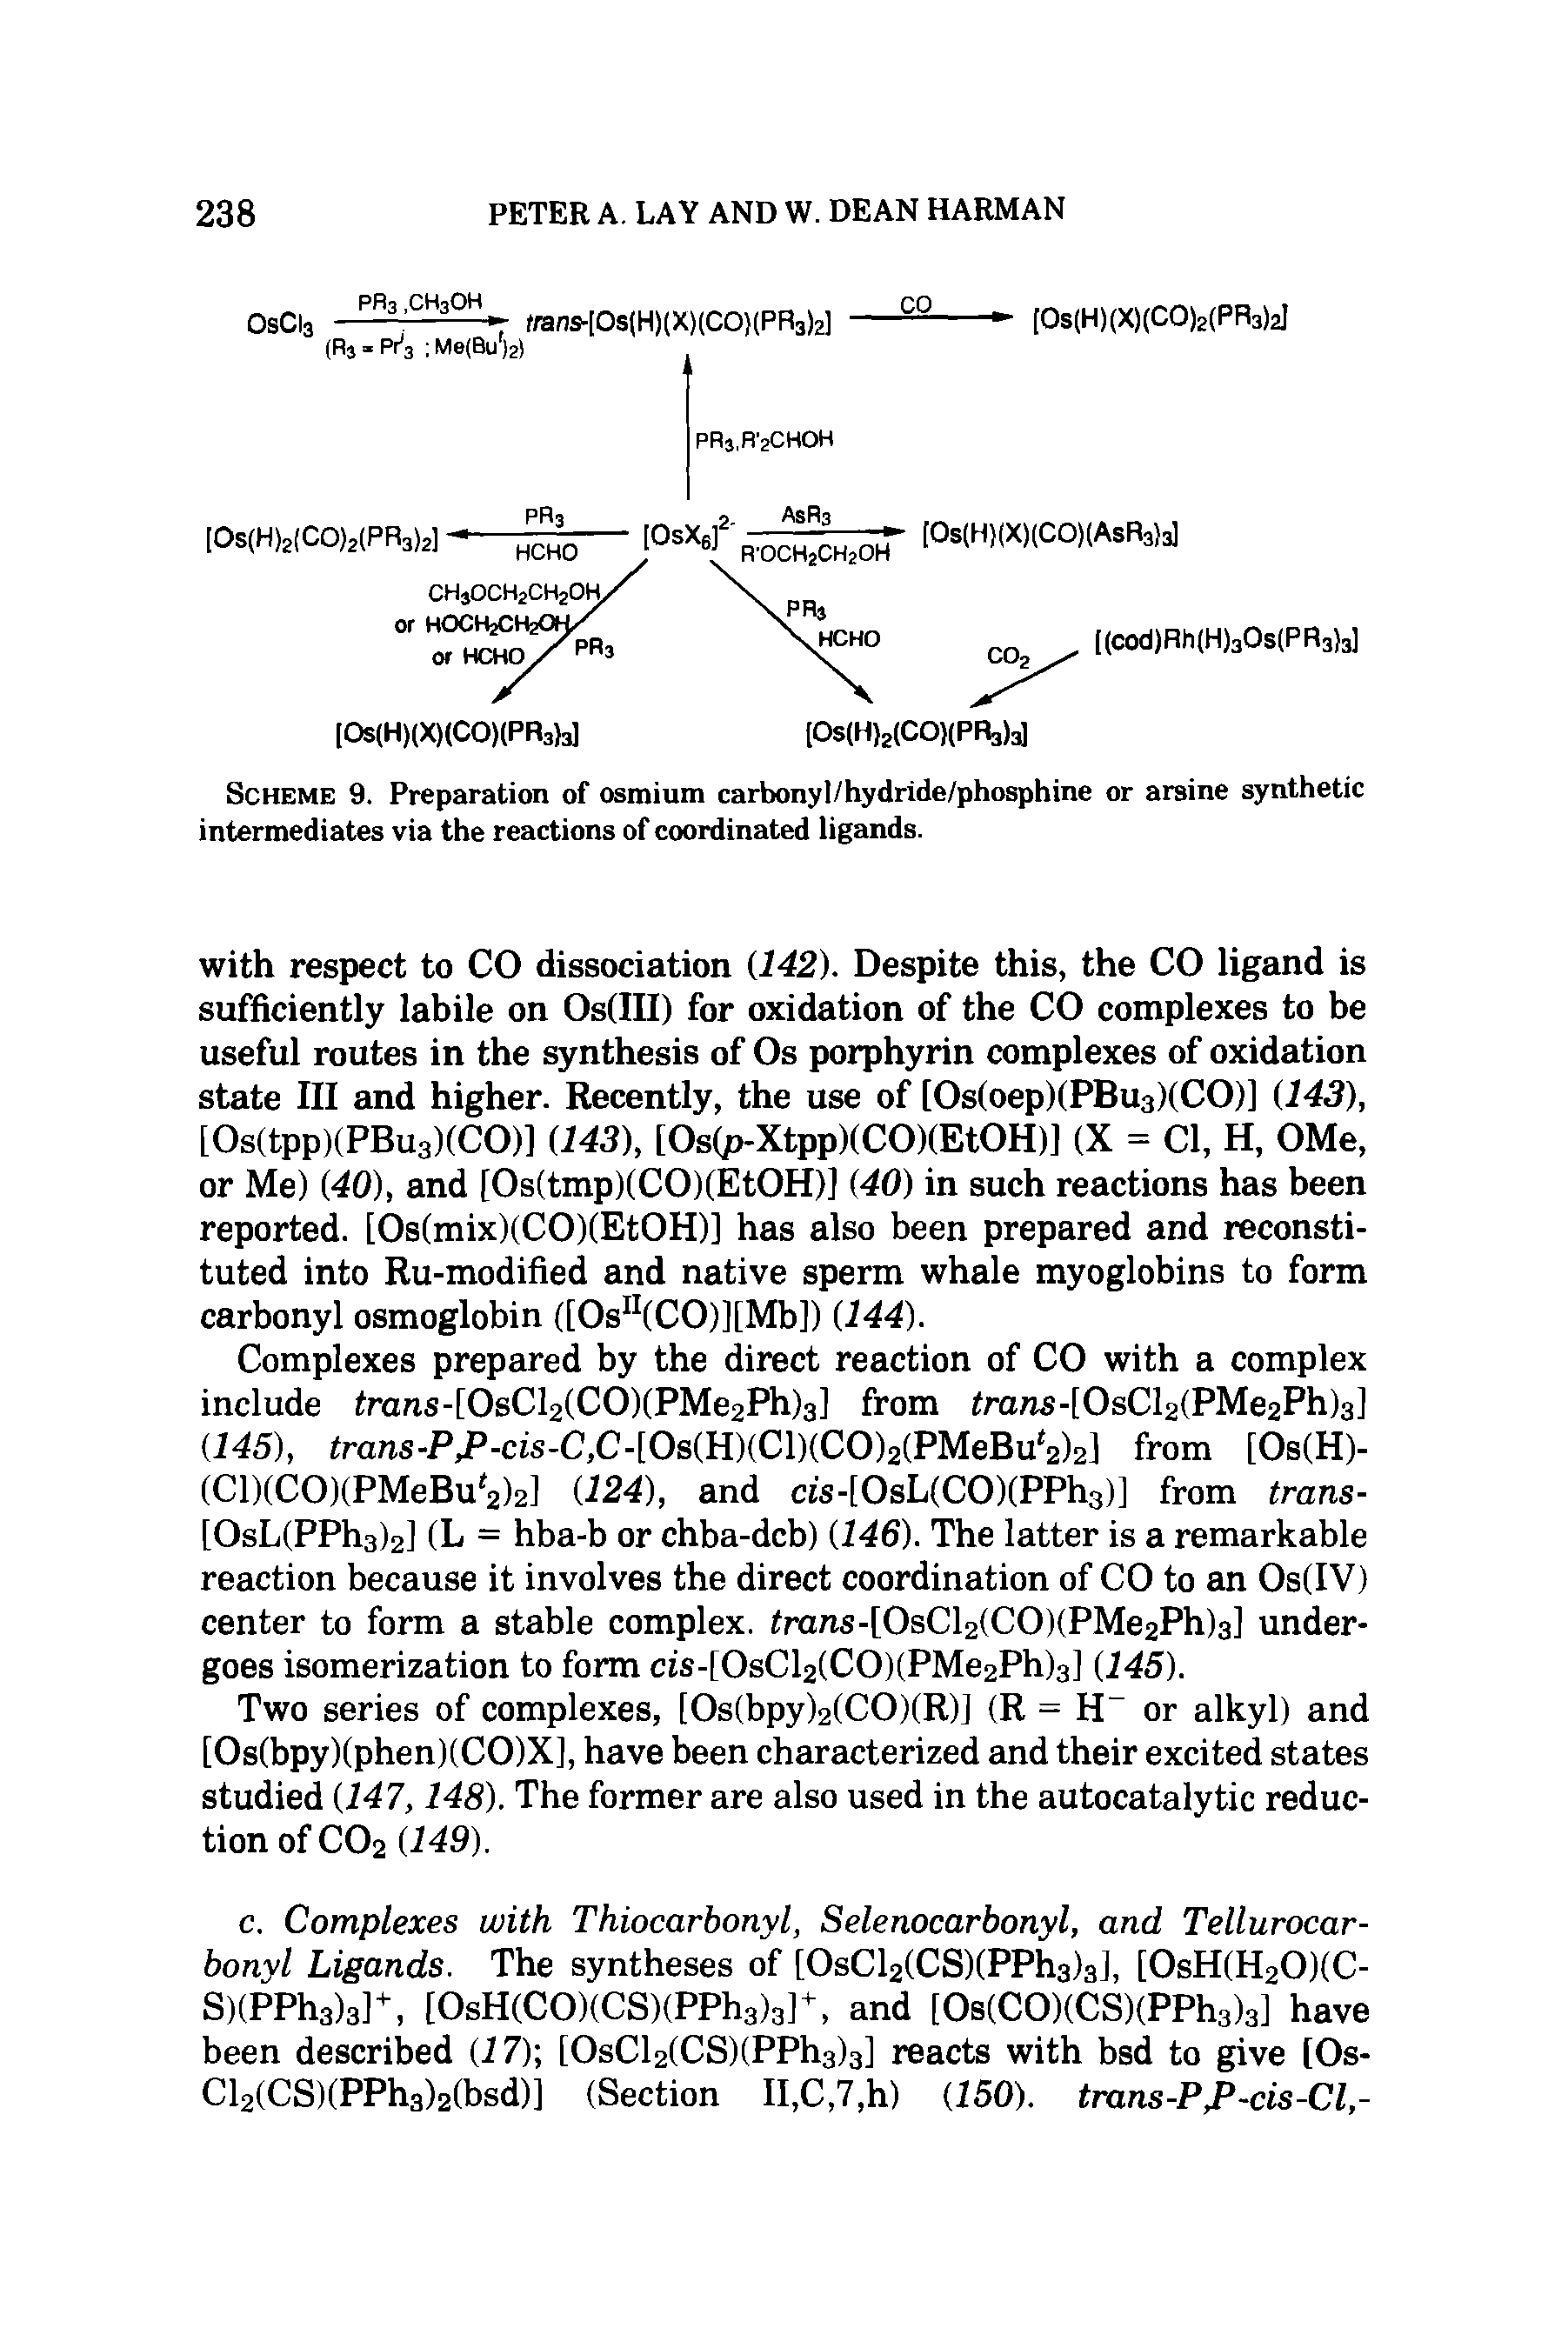 Scheme 9. Preparation of osmium carbonyl/hydride/phosphine or arsine synthetic intermediates via the reactions of coordinated ligands.